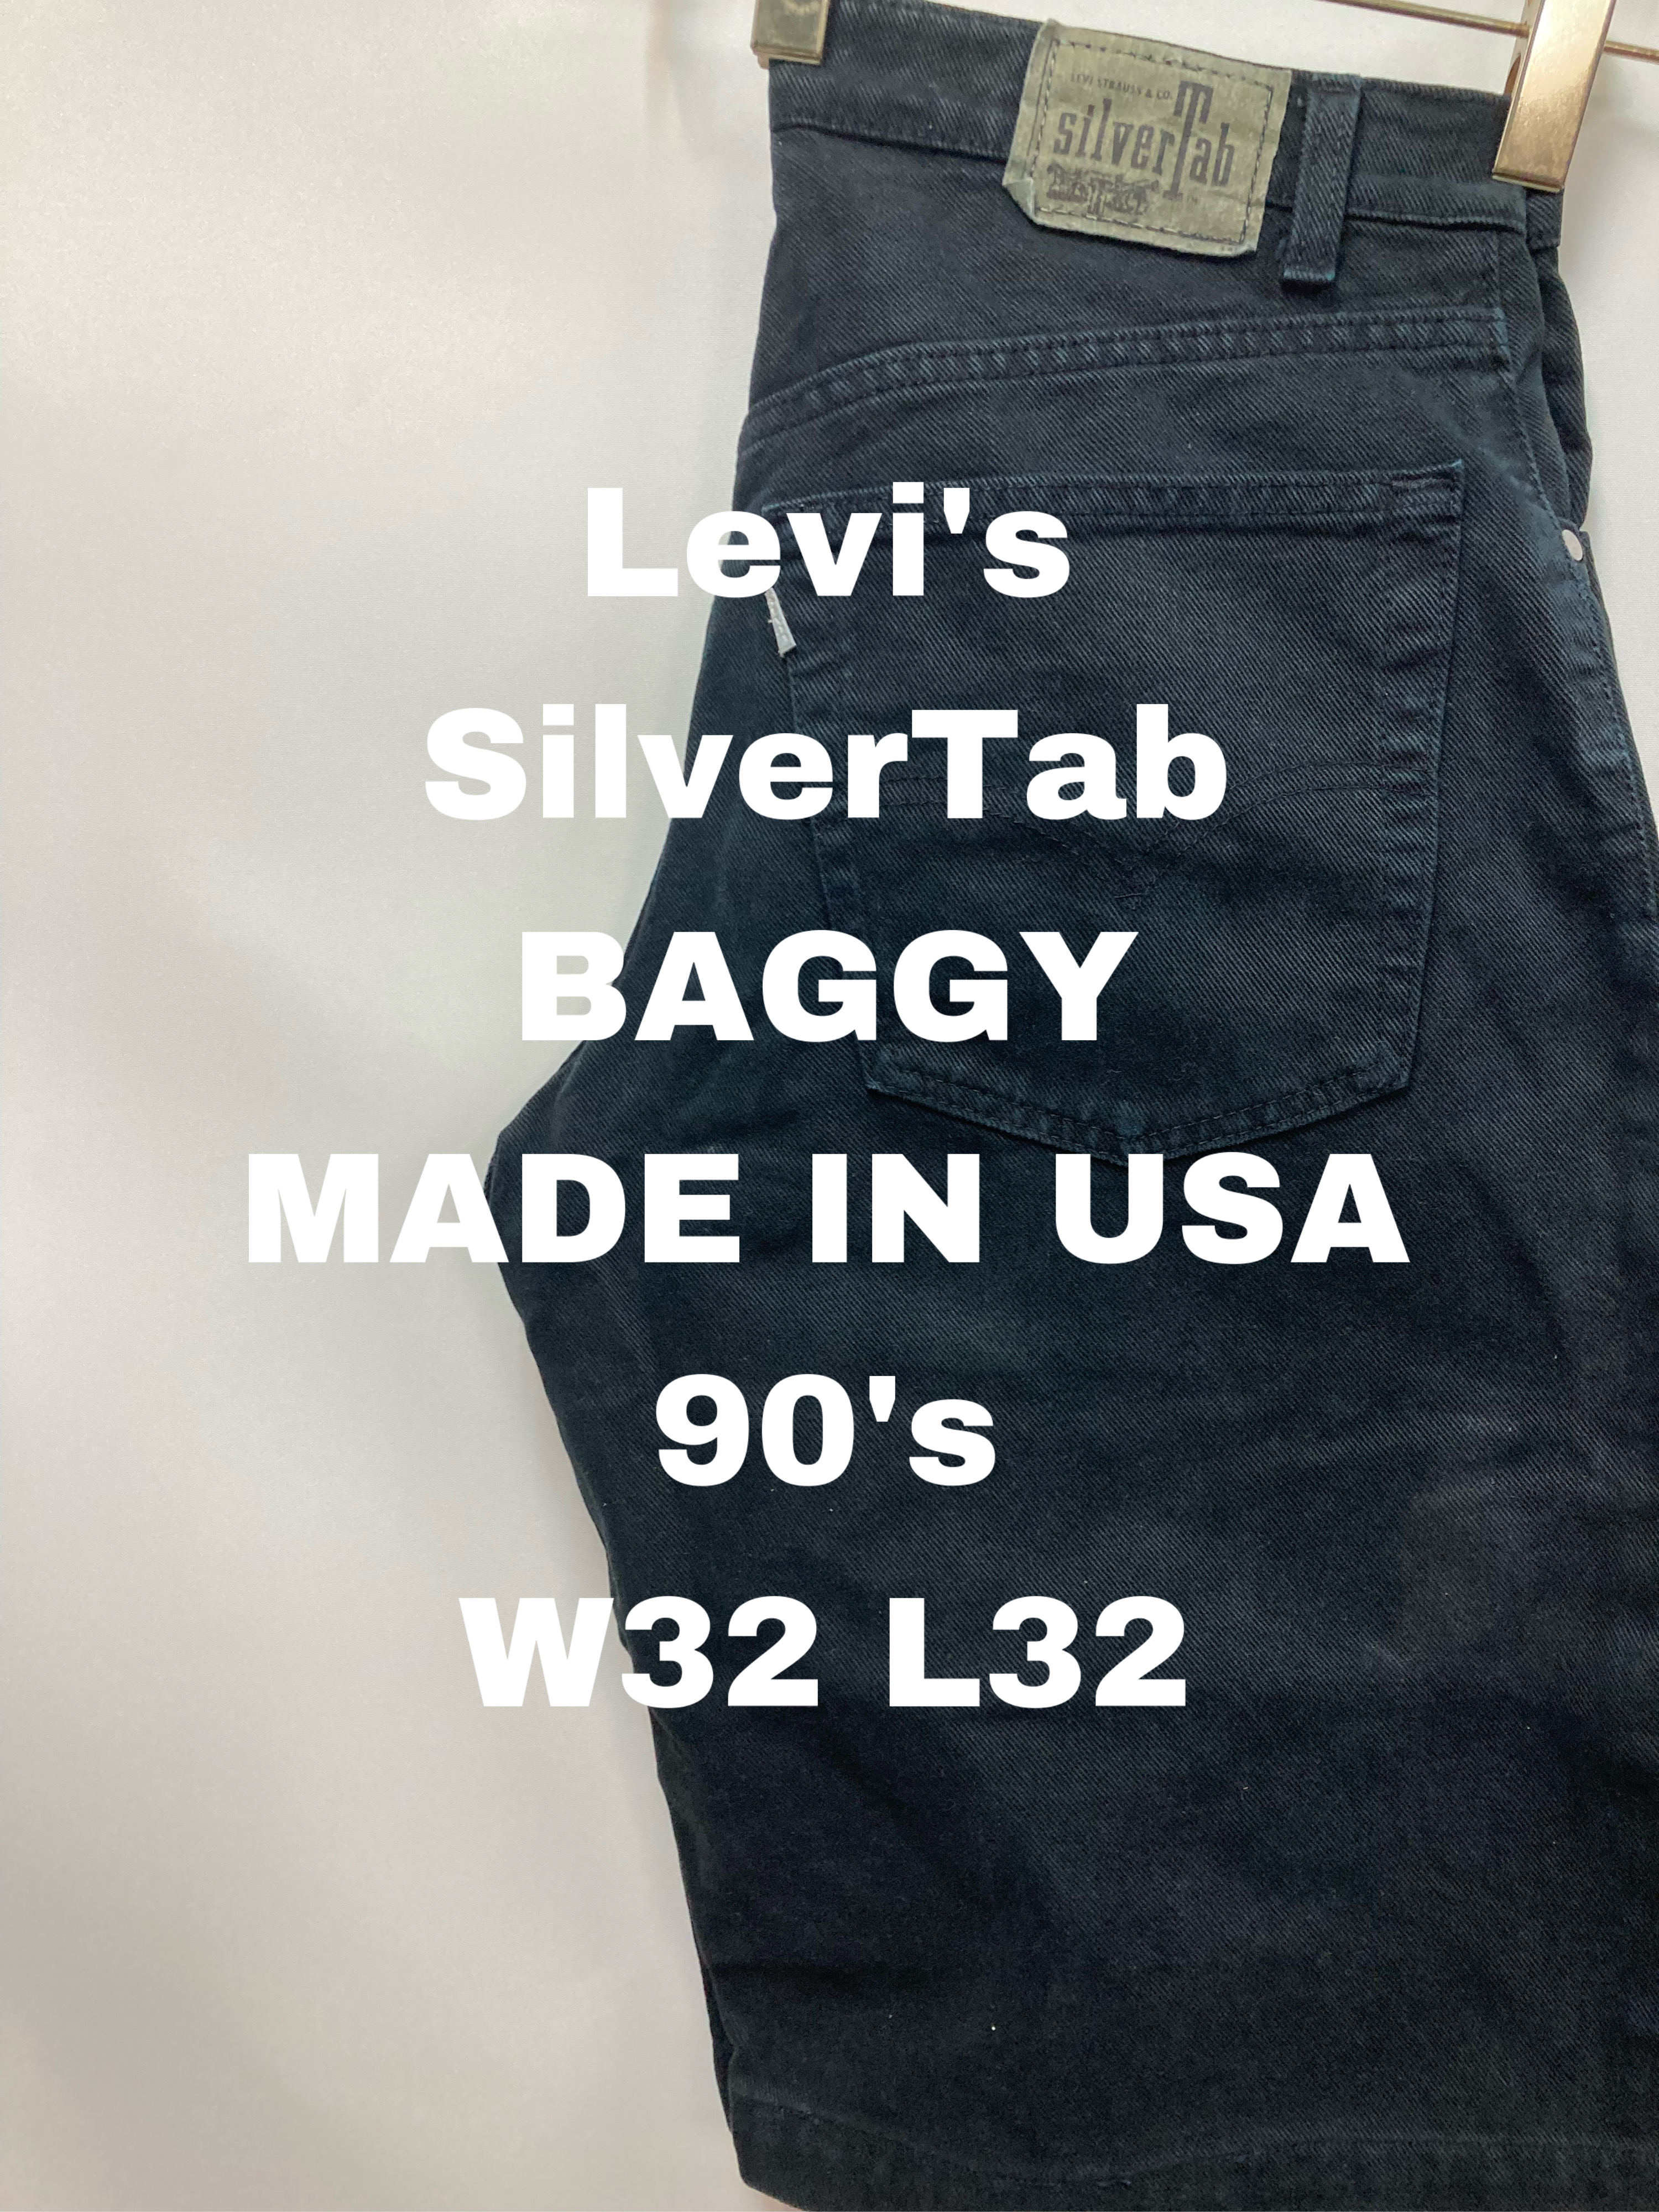 Levi’s silverTab BAGGY米国製black denim w32